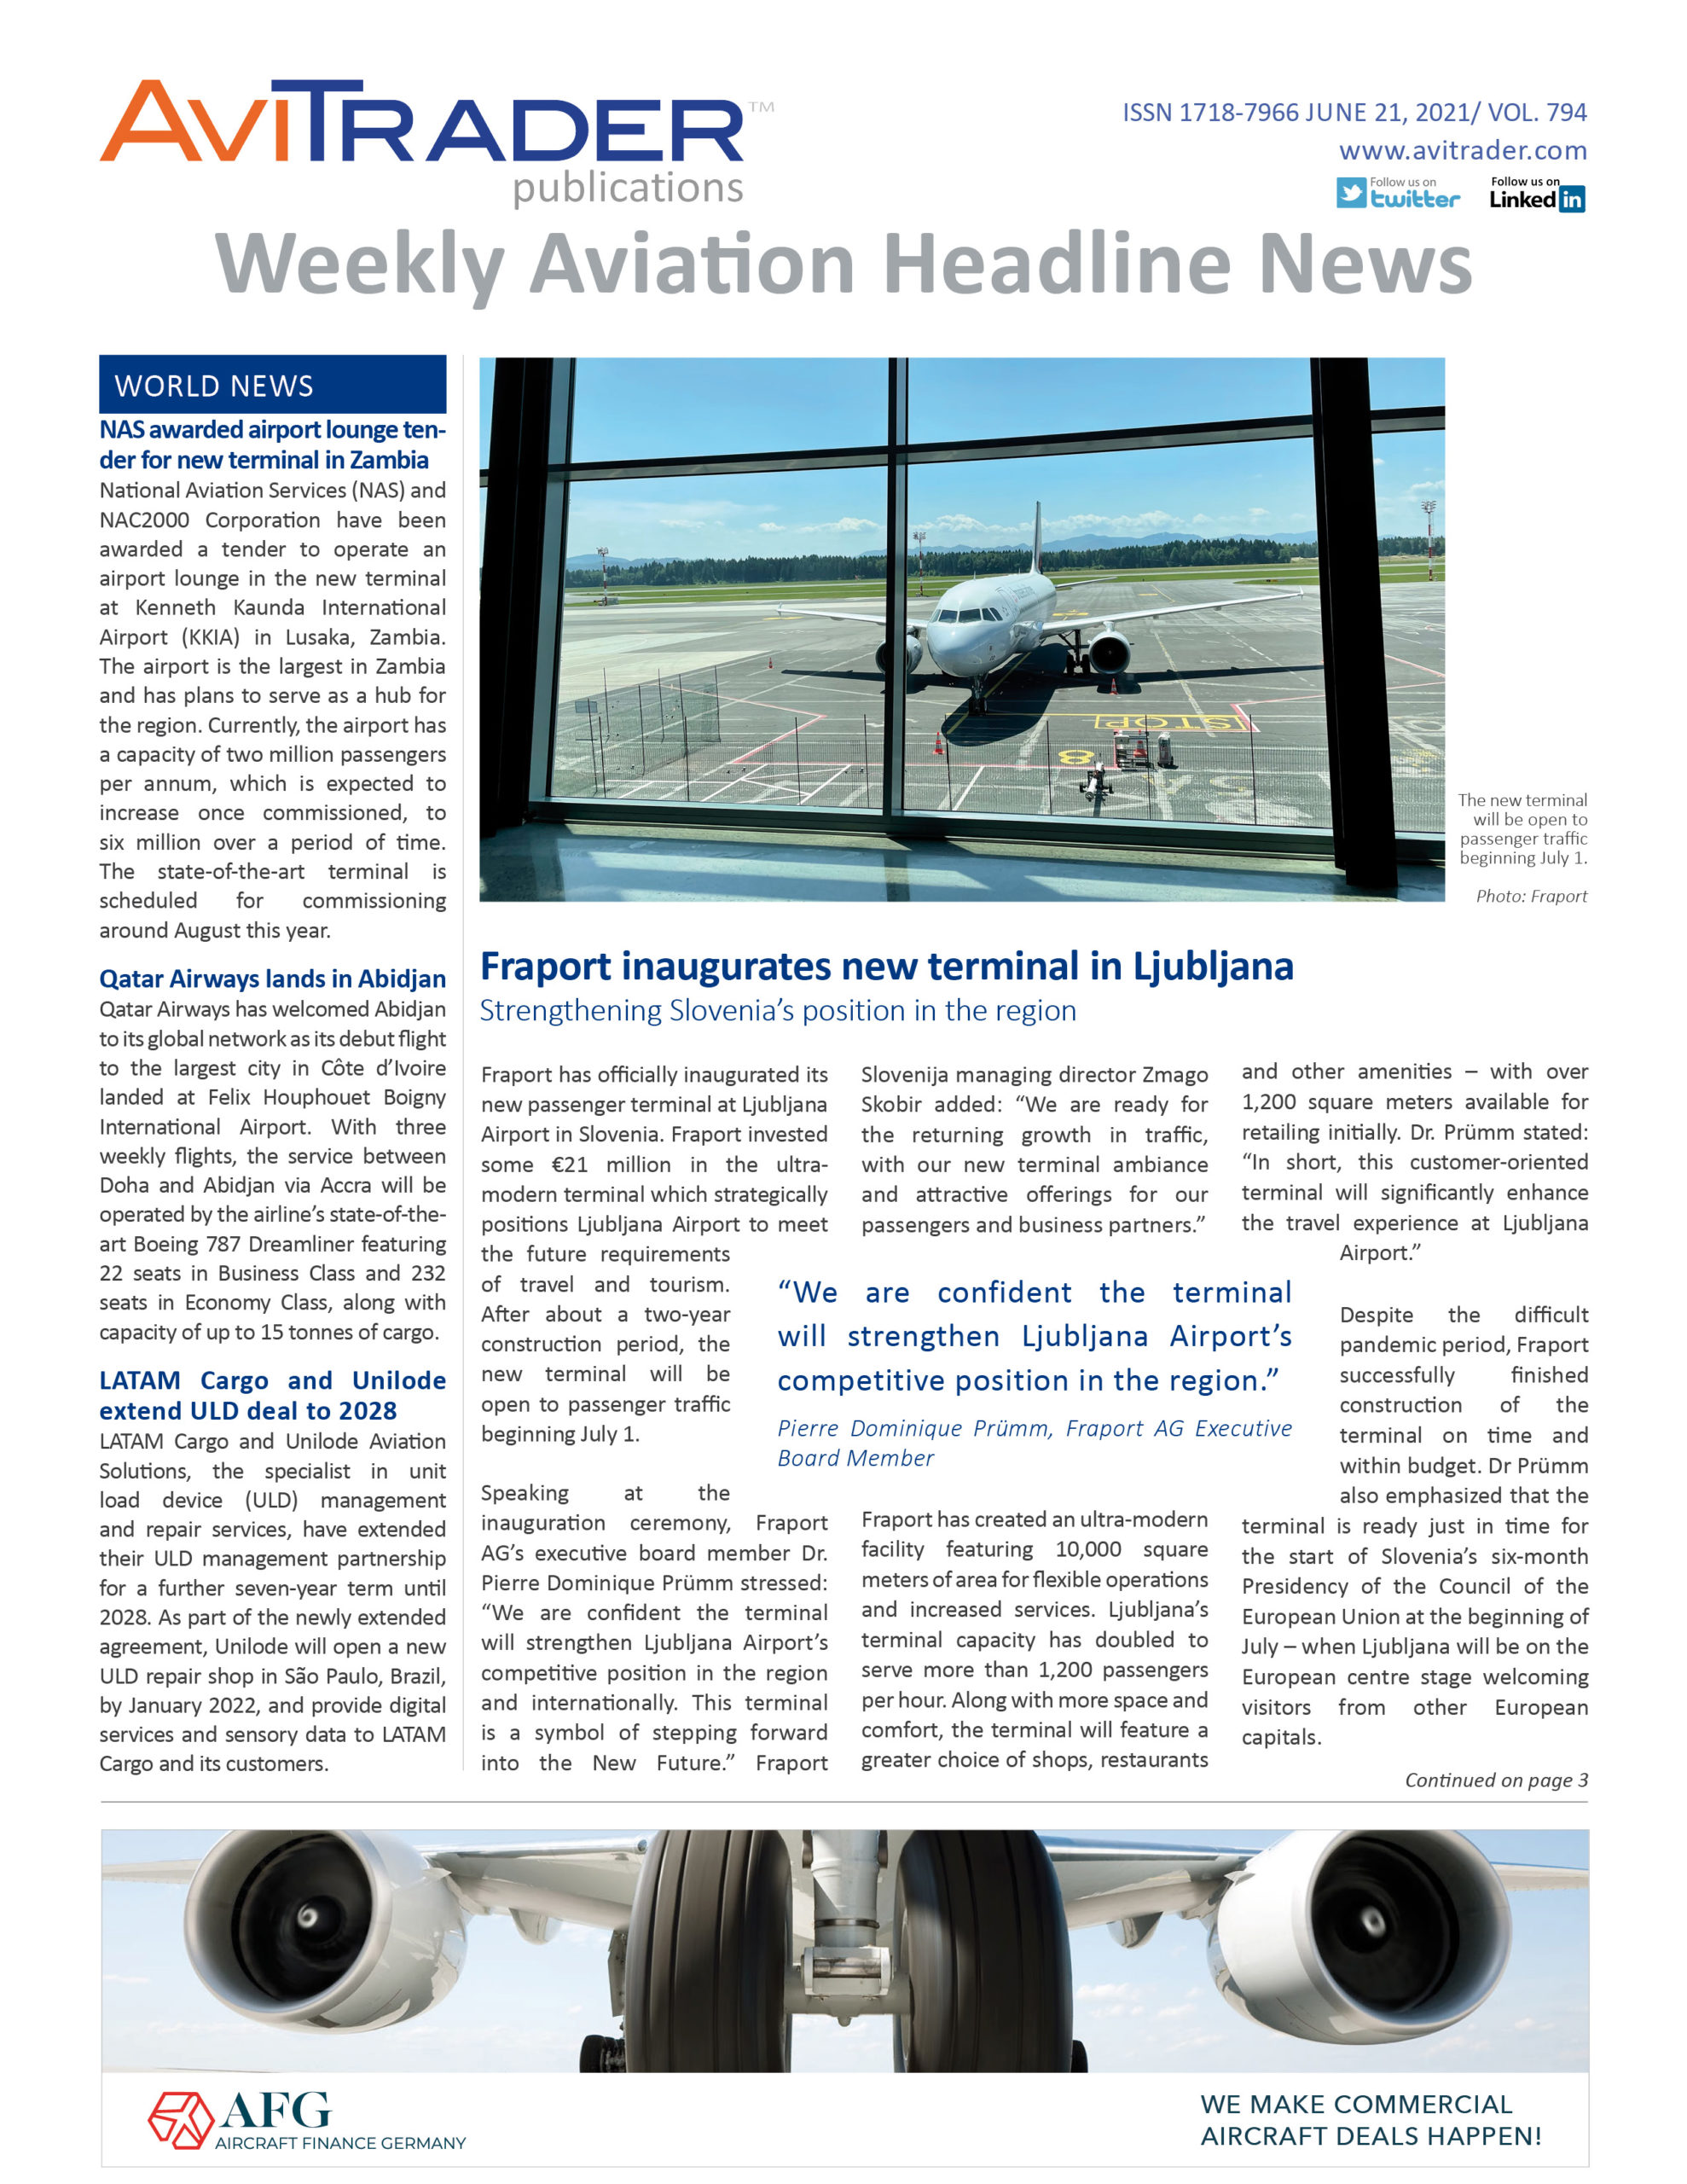 AviTrader_Weekly_Headline_News_Cover_2021-06-21